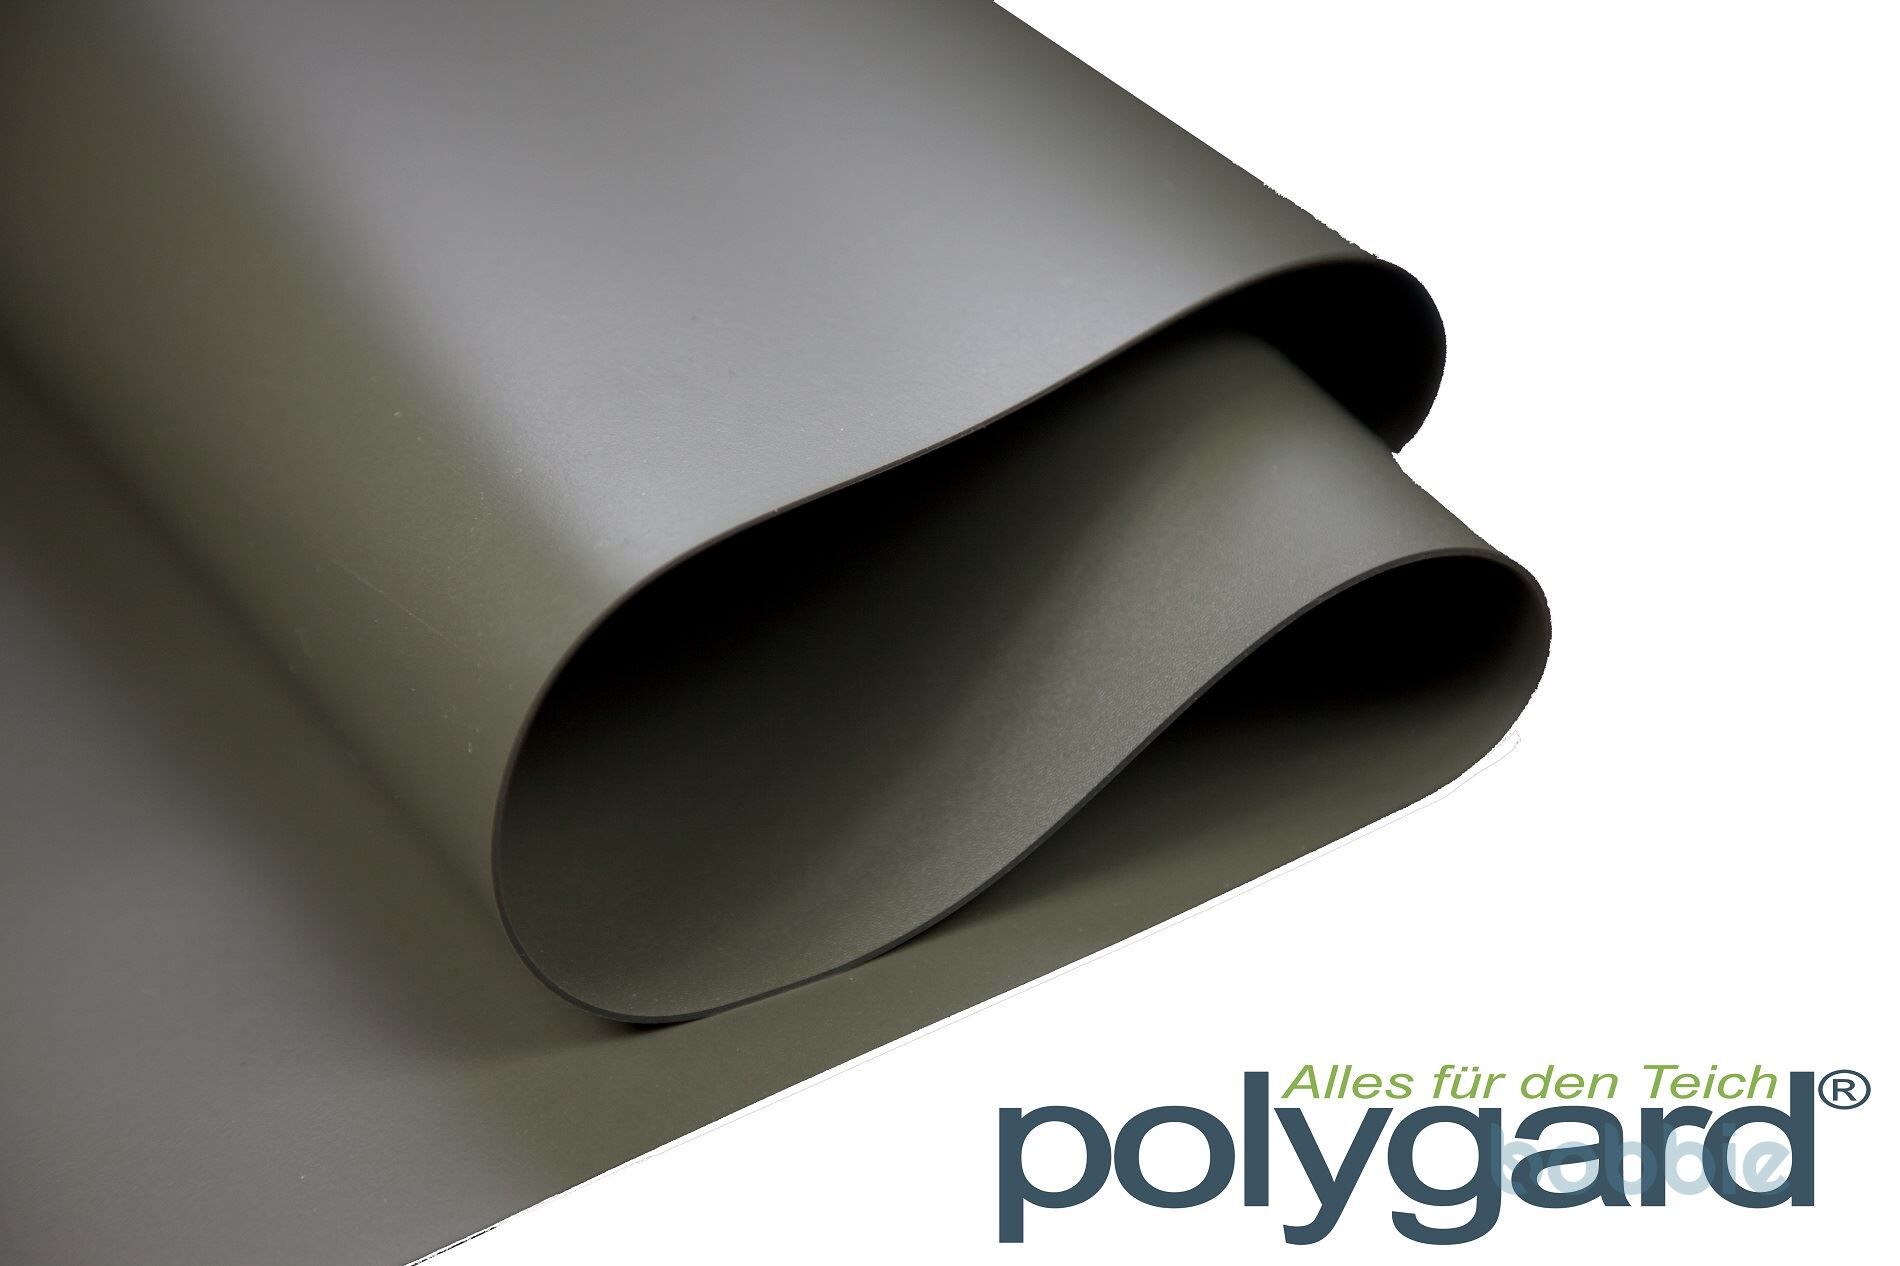 Polygard PVC Teichfolie 1mm oliv-grün PrePack - 8,0 x 6,0 m